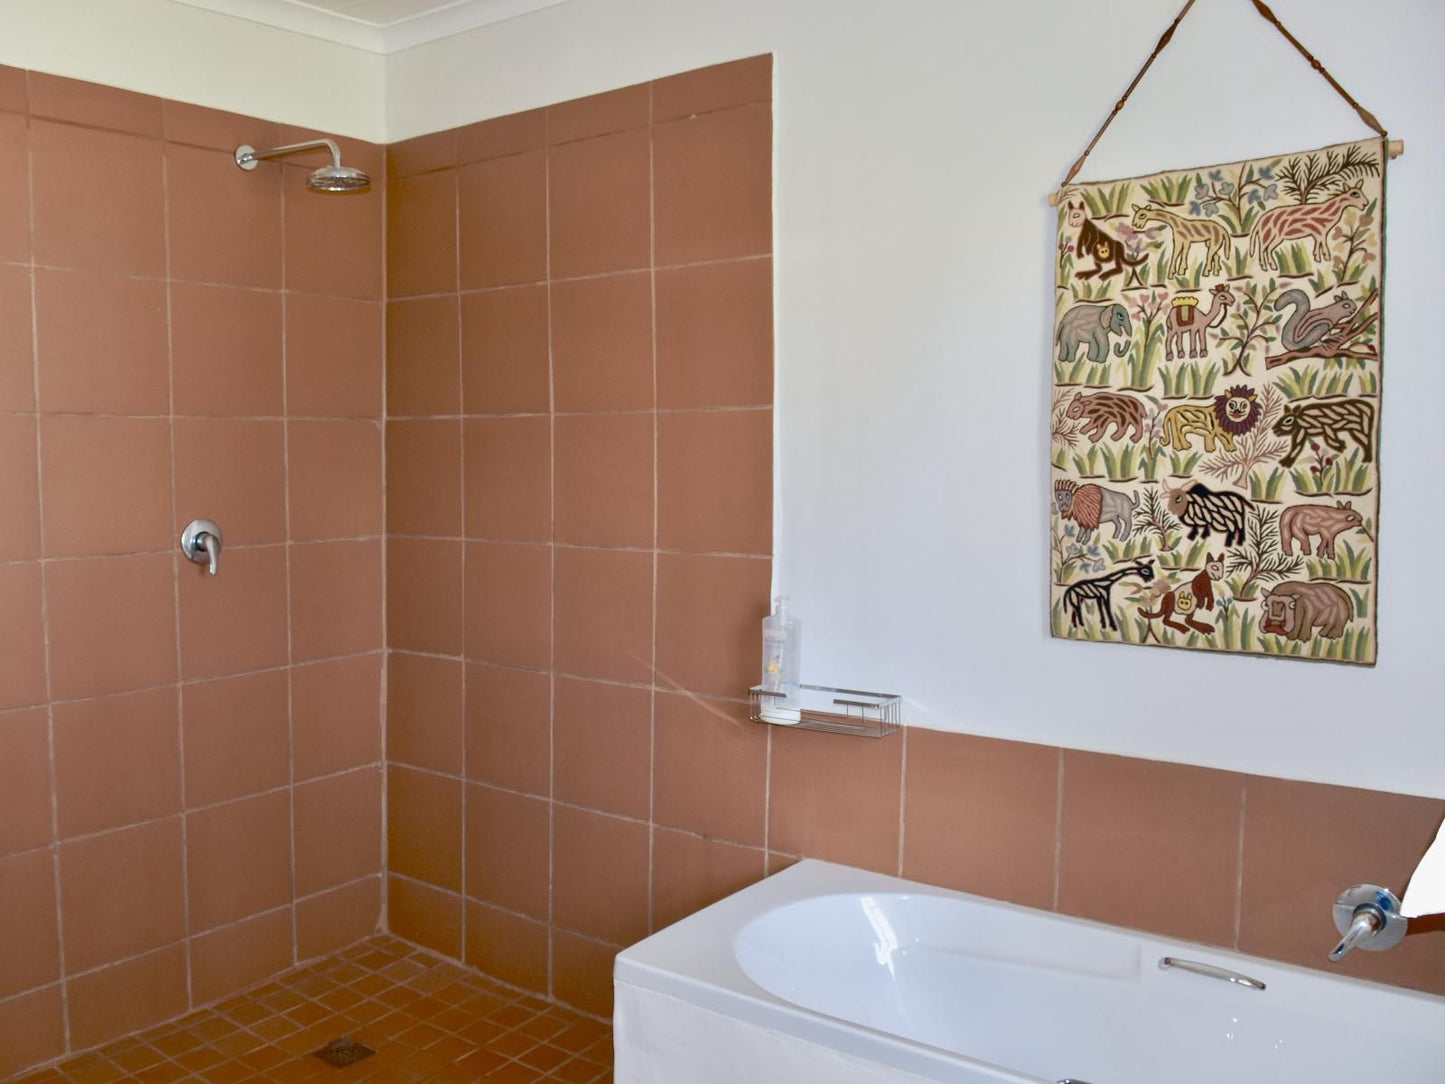 Boschoek Farm Modjadjiskloof Limpopo Province South Africa Bathroom